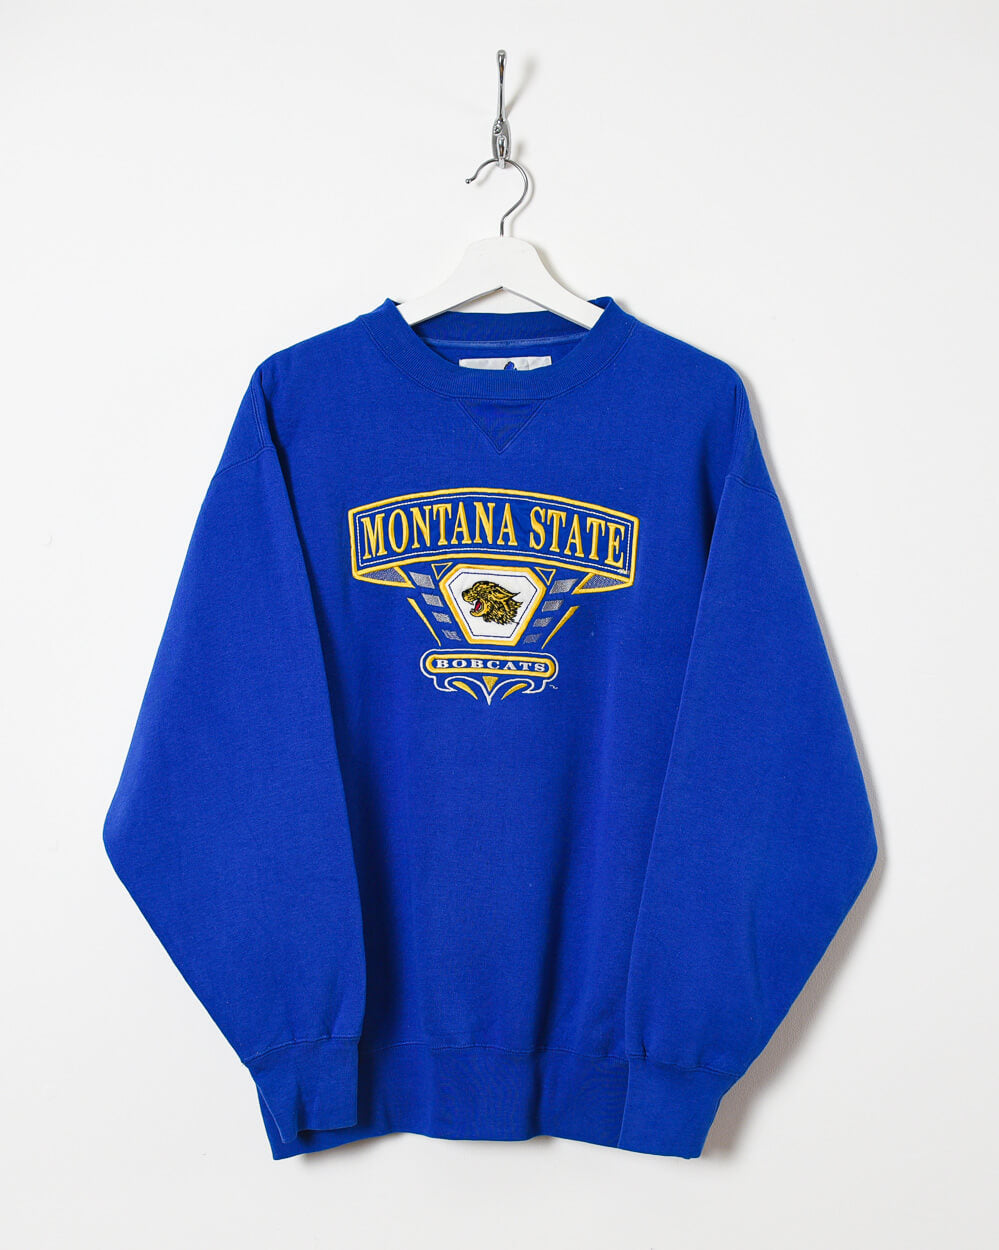 Midwest Montana State Bobcats Sweatshirt - Medium - Domno Vintage 90s, 80s, 00s Retro and Vintage Clothing 